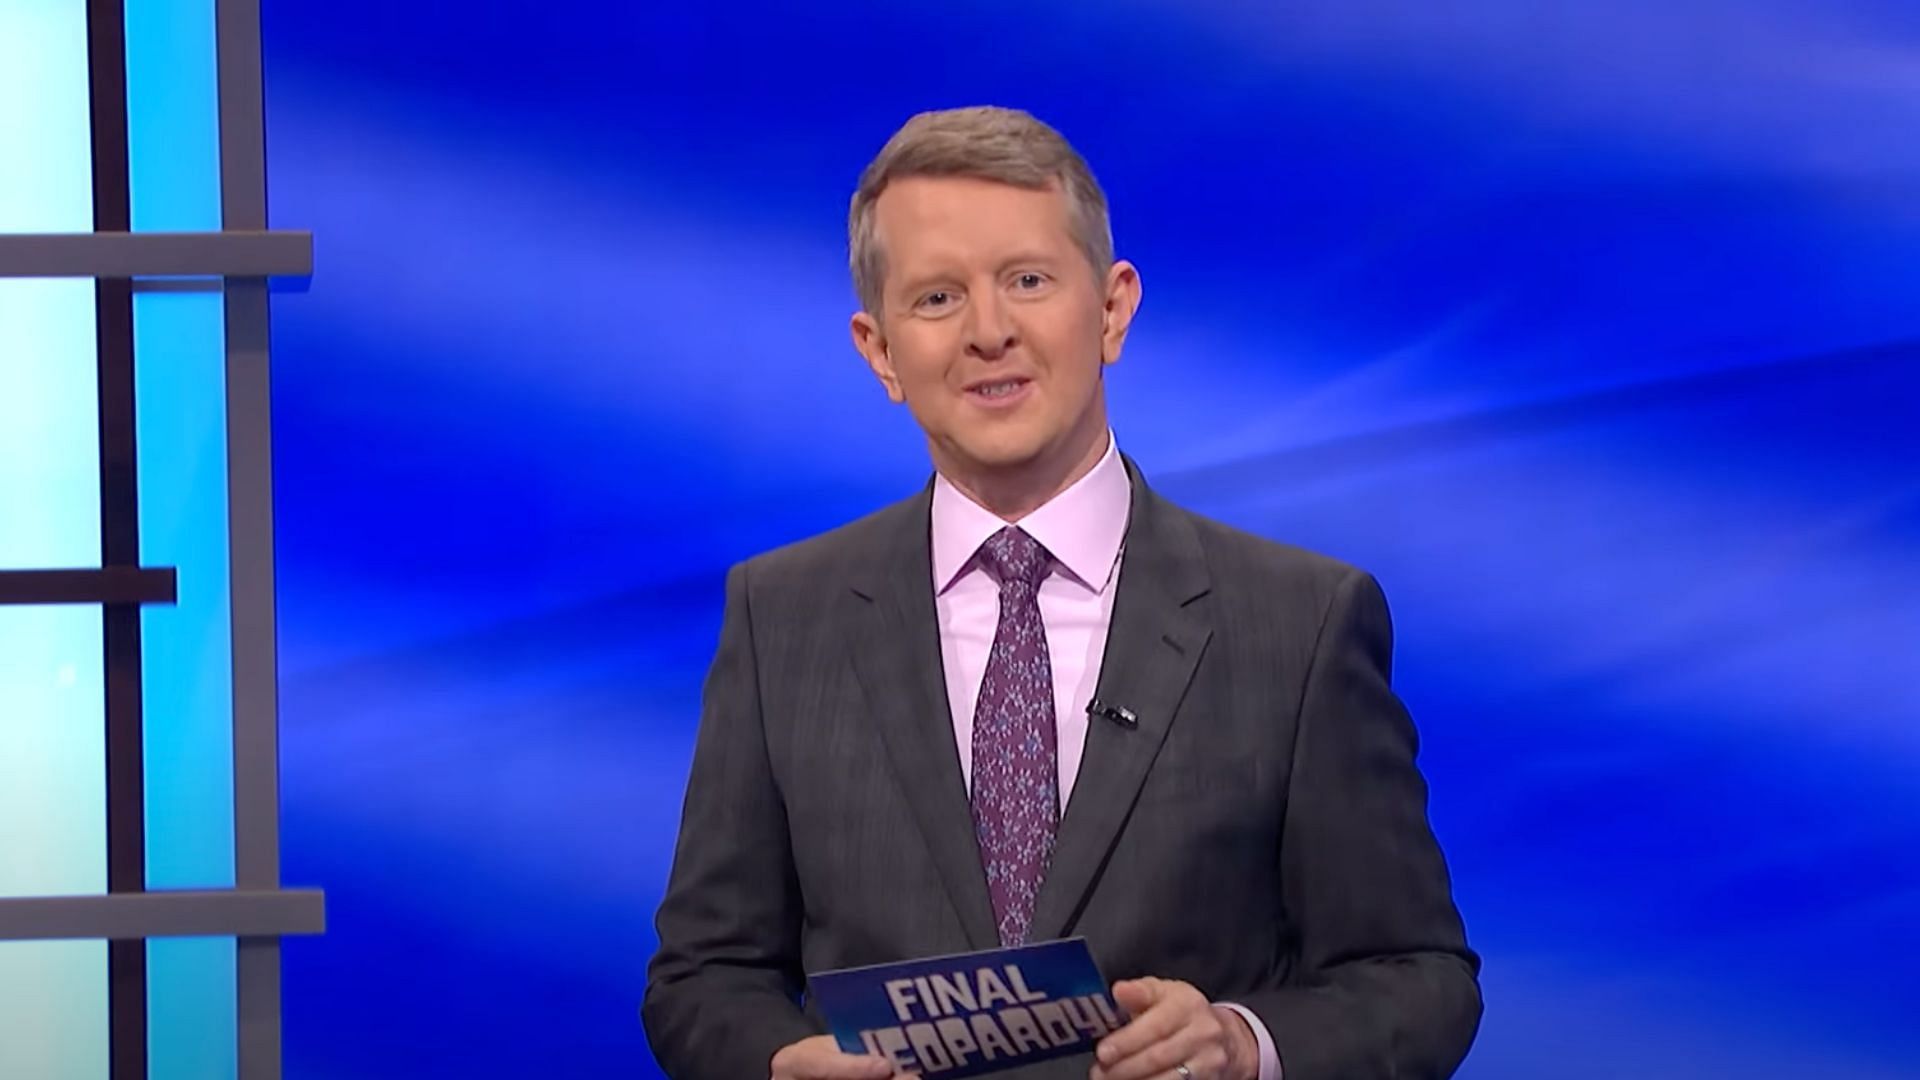 Who won Jeopardy! tonight? December 14, 2022, Wednesday